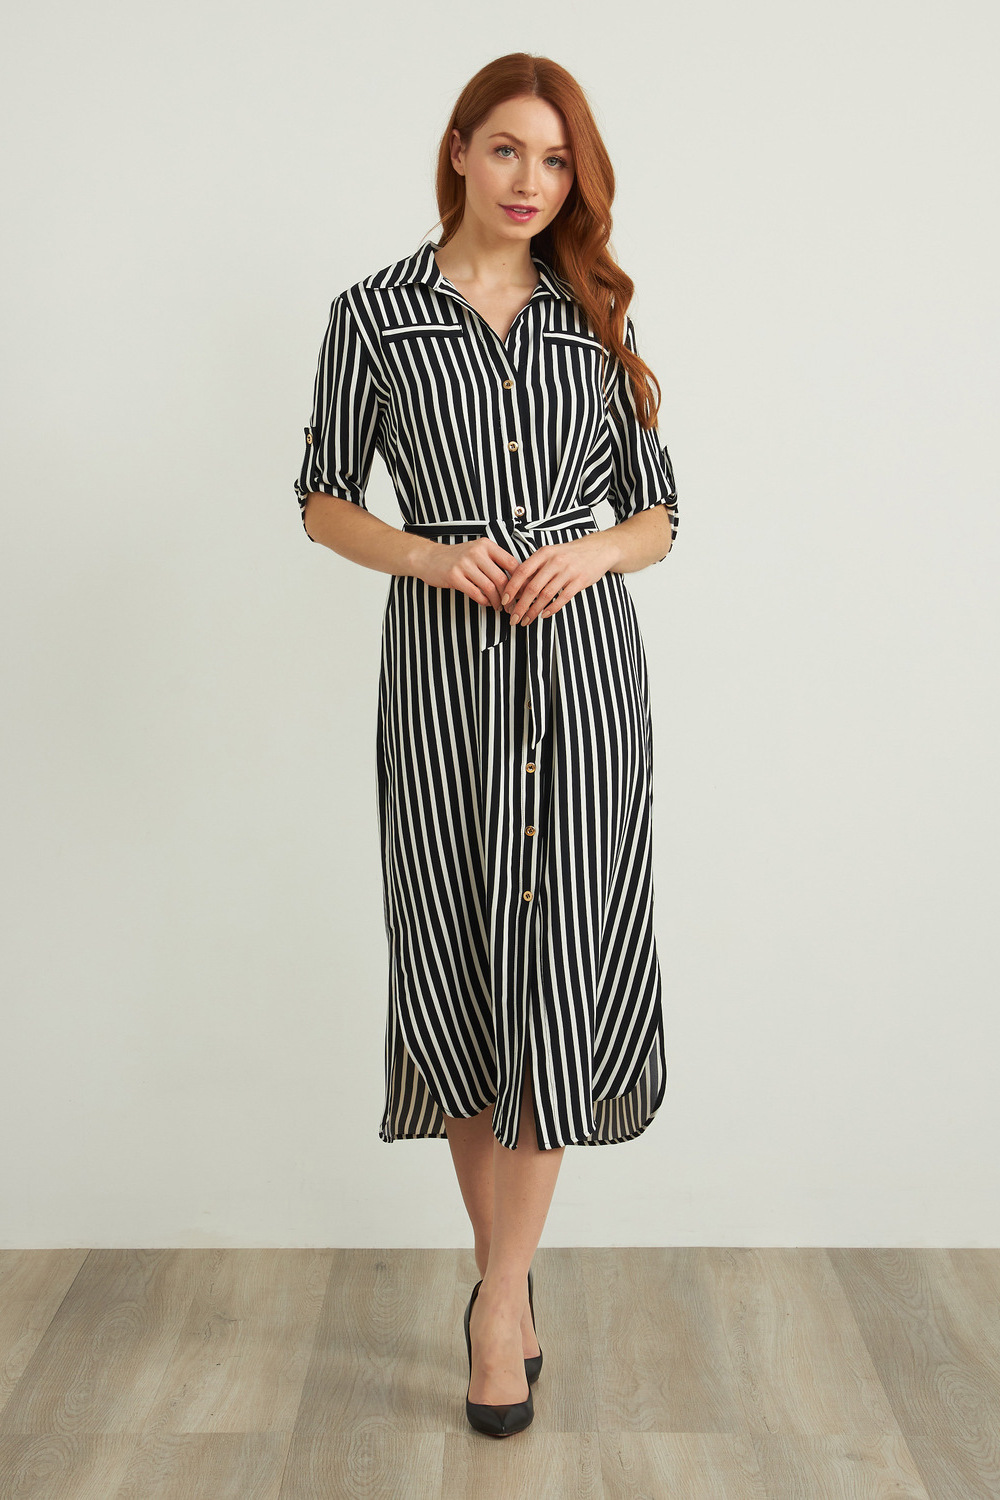 Joseph Ribkoff Striped Shirt Dress Style 212162. Black/vanilla